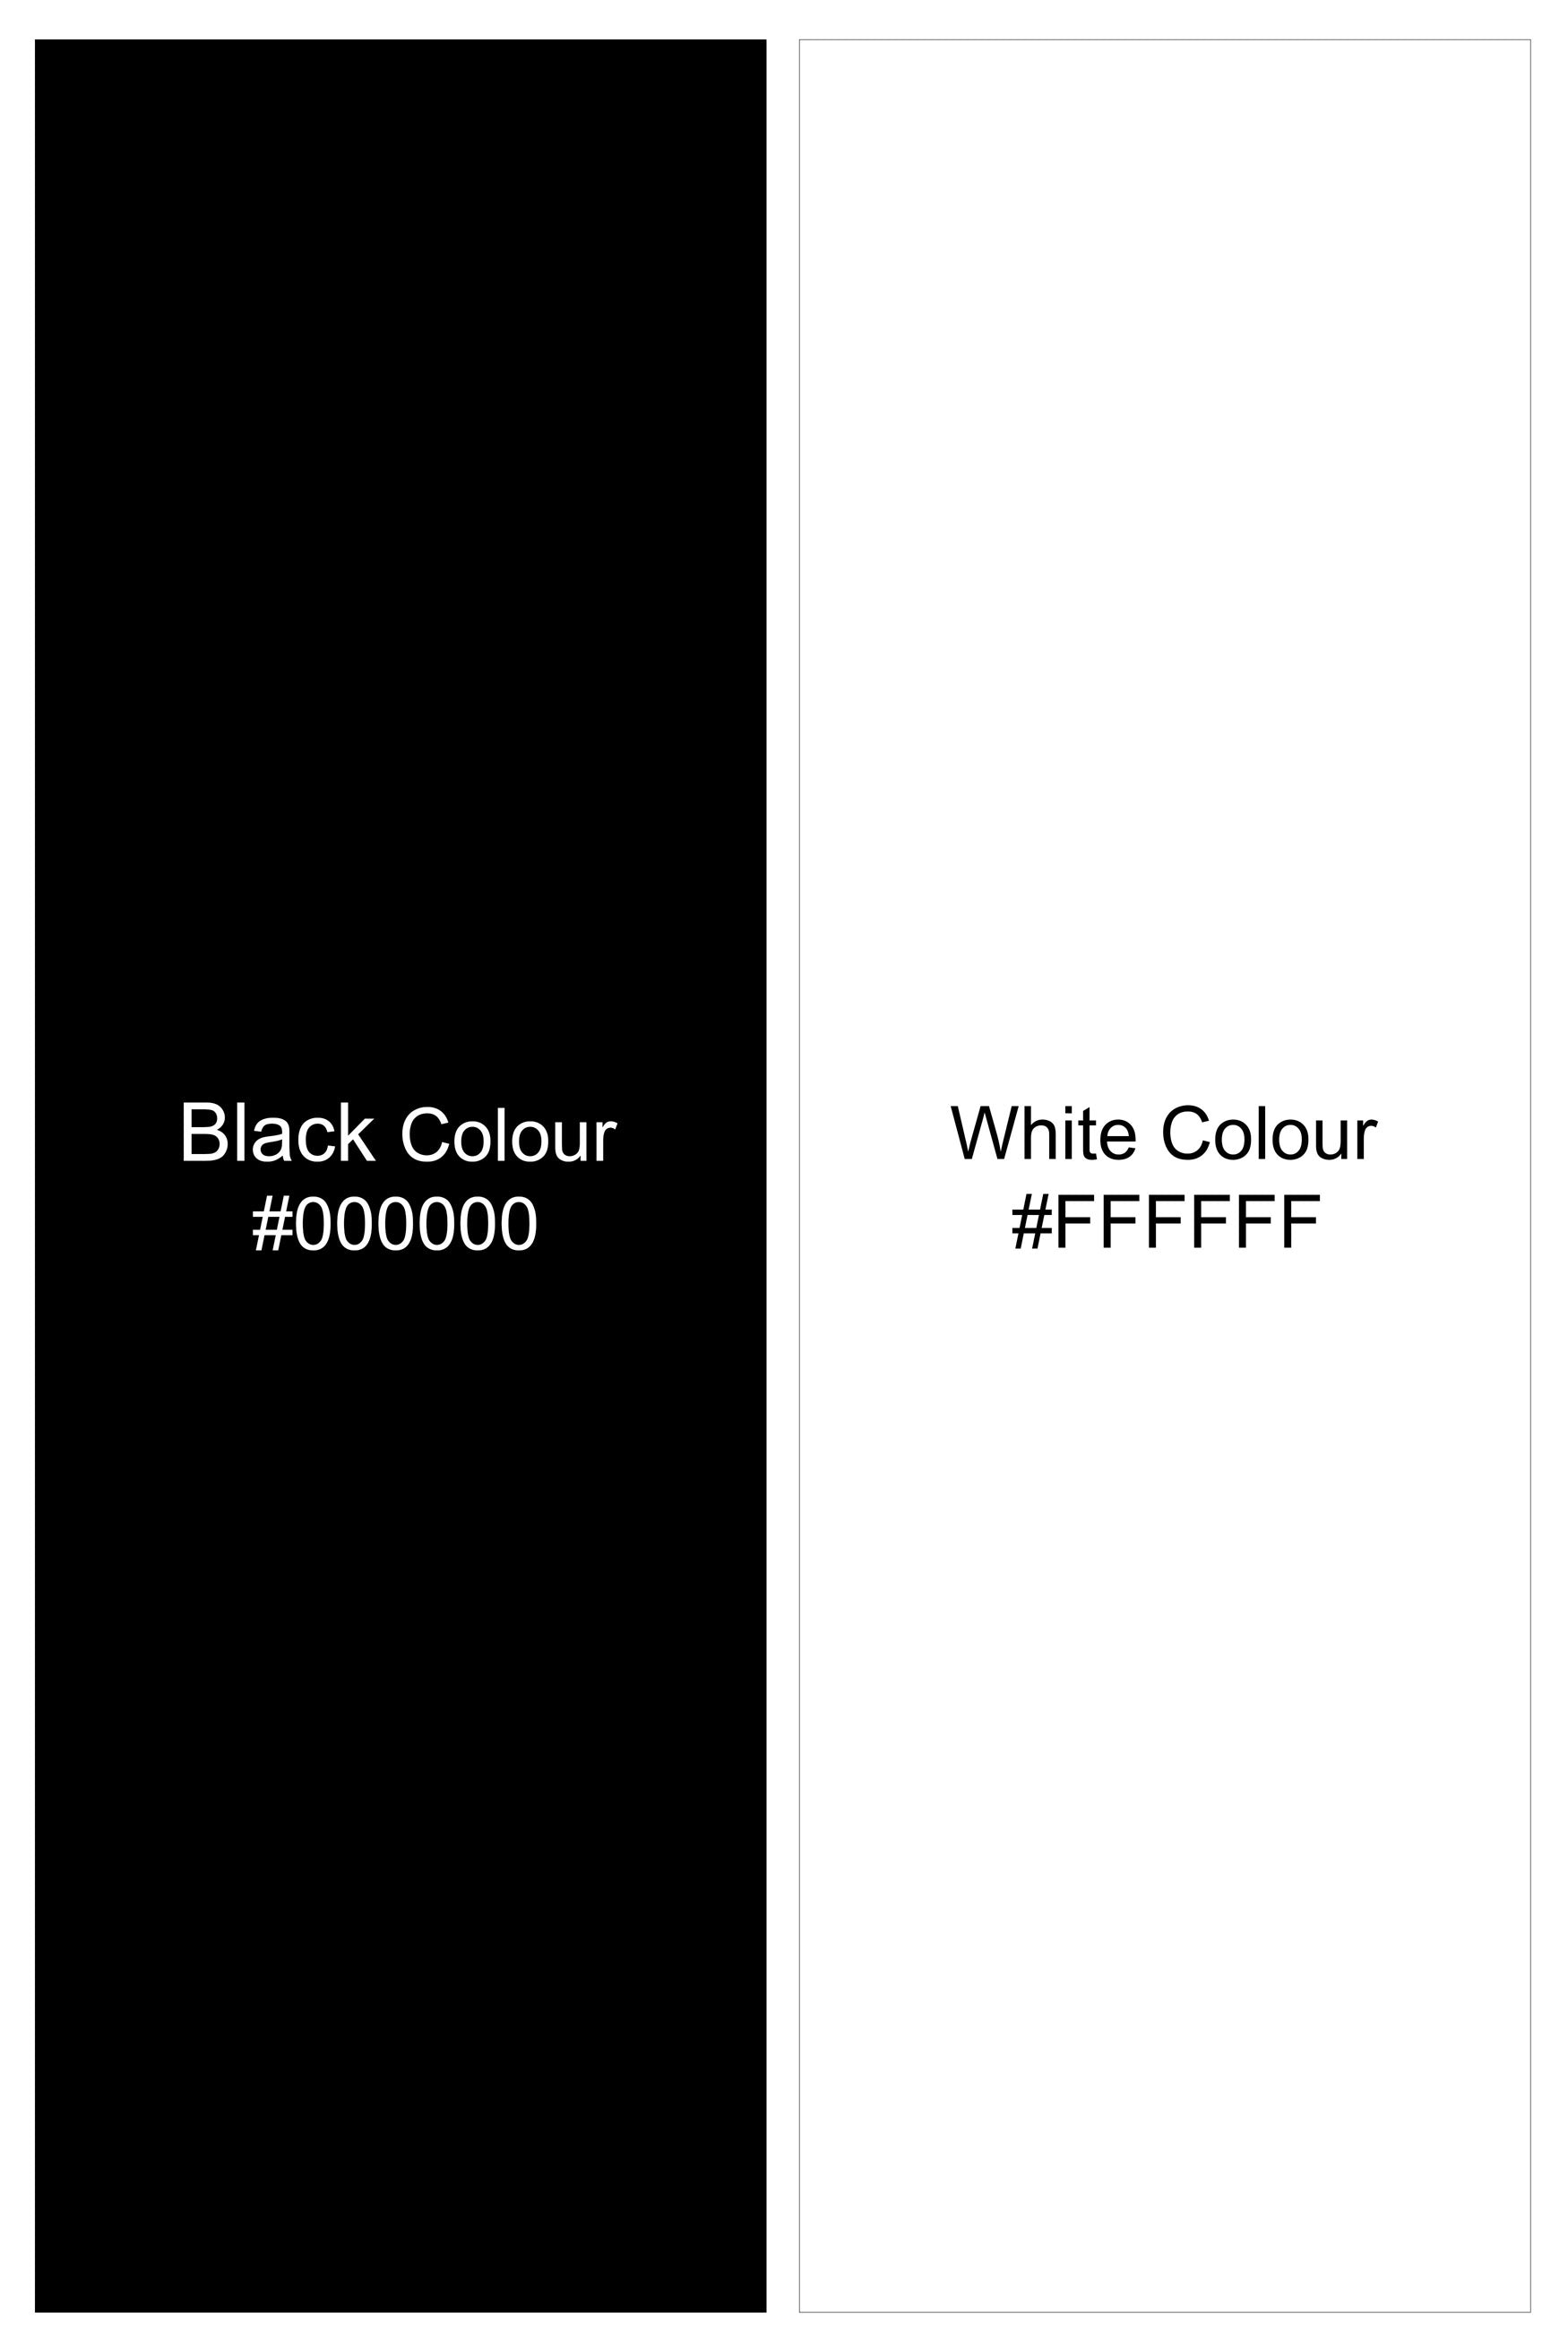 Bright White and Black Abstract Printed Twill Premium Cotton Shirt 11673-BD-BLK-38, 11673-BD-BLK-H-38, 11673-BD-BLK-39, 11673-BD-BLK-H-39, 11673-BD-BLK-40, 11673-BD-BLK-H-40, 11673-BD-BLK-42, 11673-BD-BLK-H-42, 11673-BD-BLK-44, 11673-BD-BLK-H-44, 11673-BD-BLK-46, 11673-BD-BLK-H-46, 11673-BD-BLK-48, 11673-BD-BLK-H-48, 11673-BD-BLK-50, 11673-BD-BLK-H-50, 11673-BD-BLK-52, 11673-BD-BLK-H-52